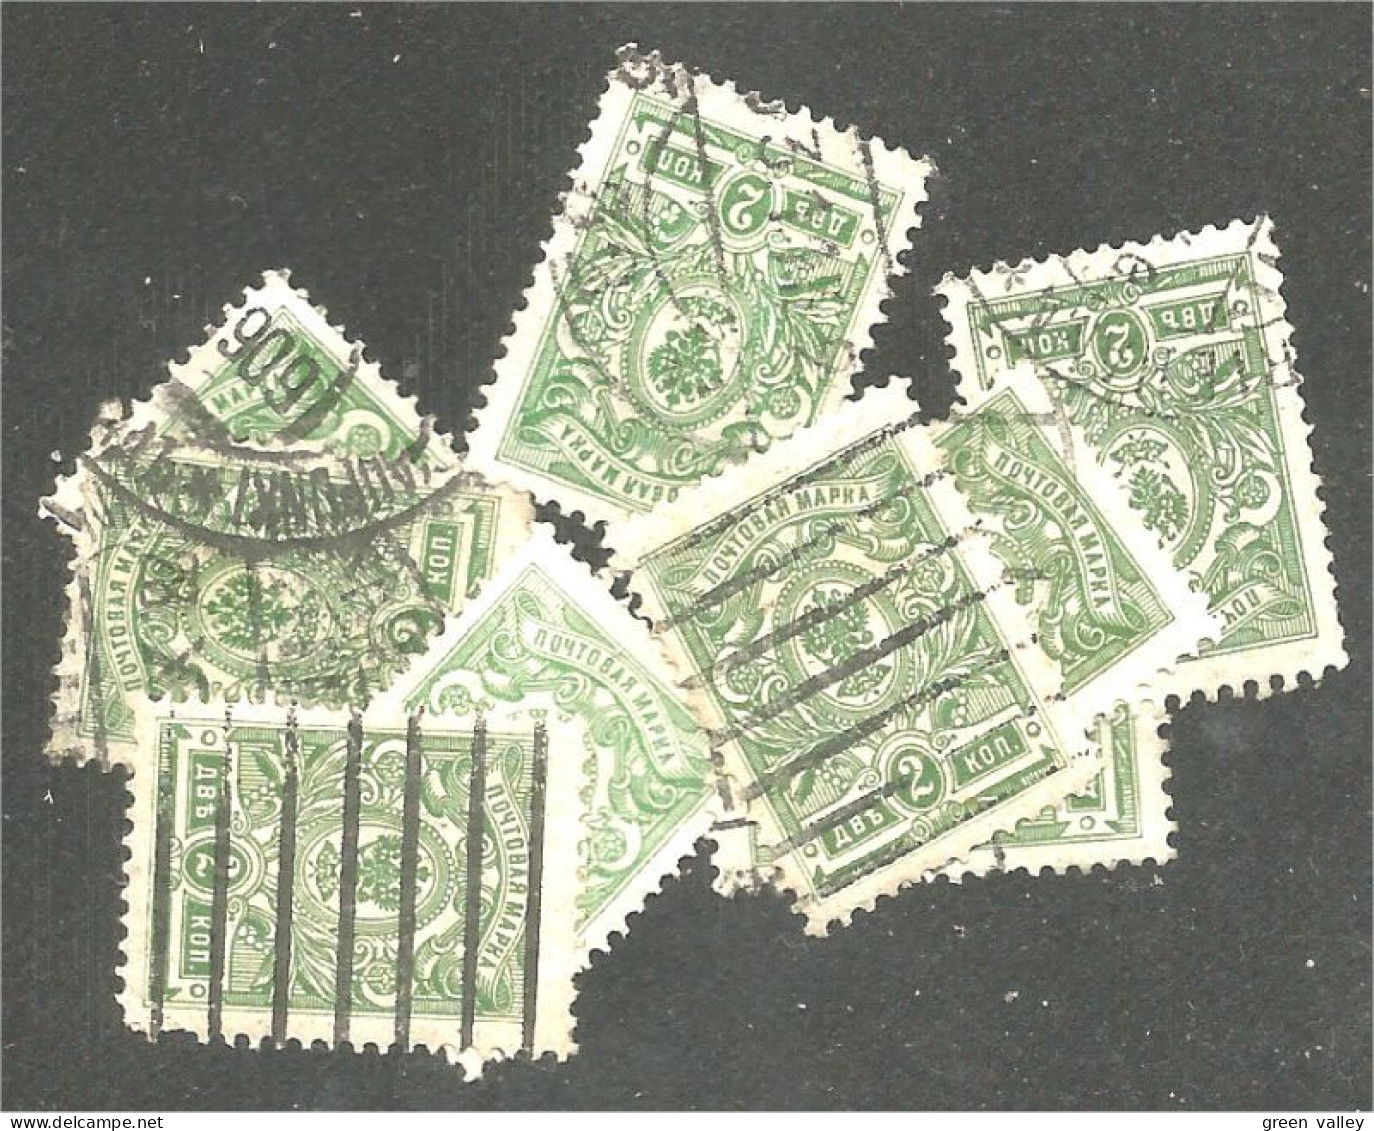 771 Russie 2k 1909 9 Stamps Green Vert Aigle Imperial Eagle Post Horn Cor Postal Varnish (RUZ-352) - Usati